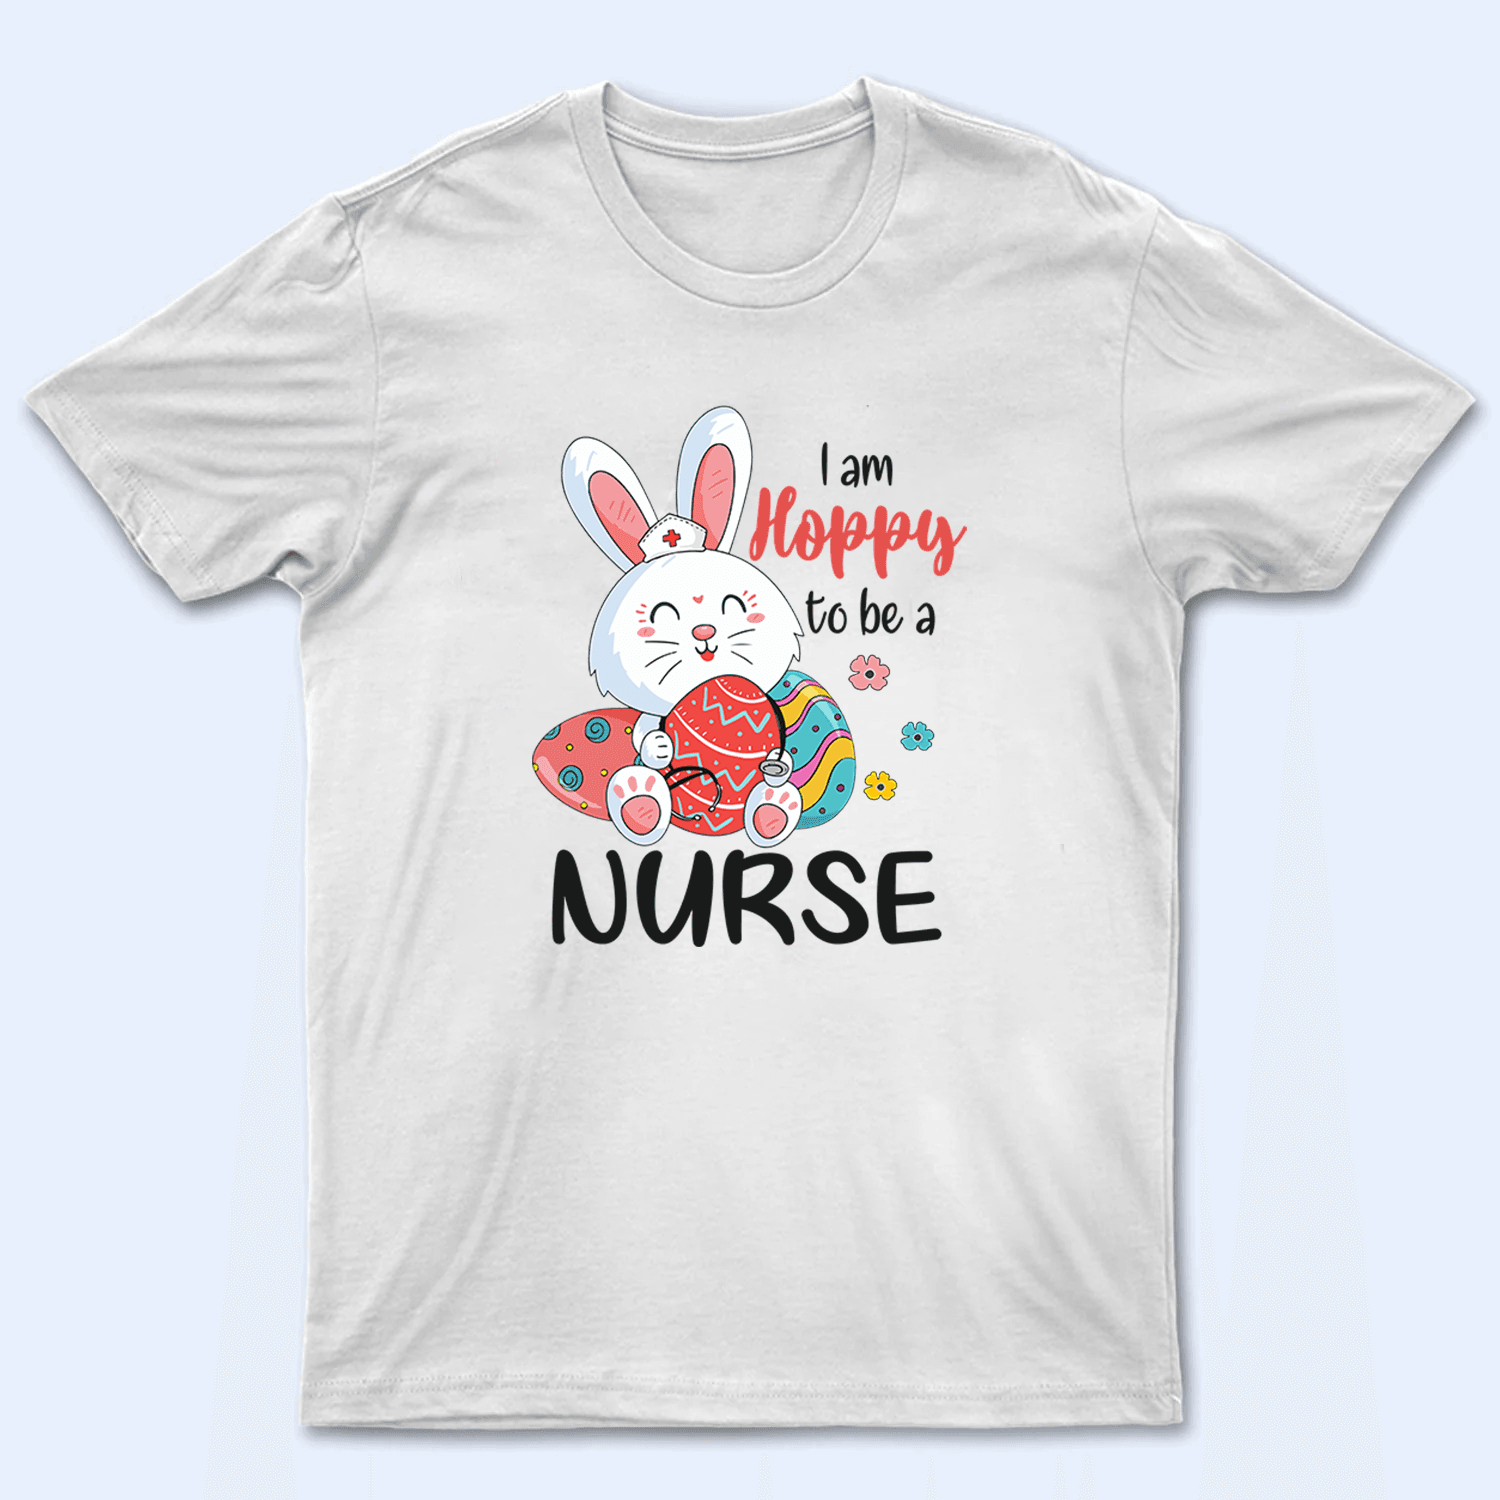 Hoppy Nurse - Personalized Custom T Shirt - Birthday, Loving, Funny Gift for Nurse, CNA, Healthcare, Registered RN - Suzitee Store